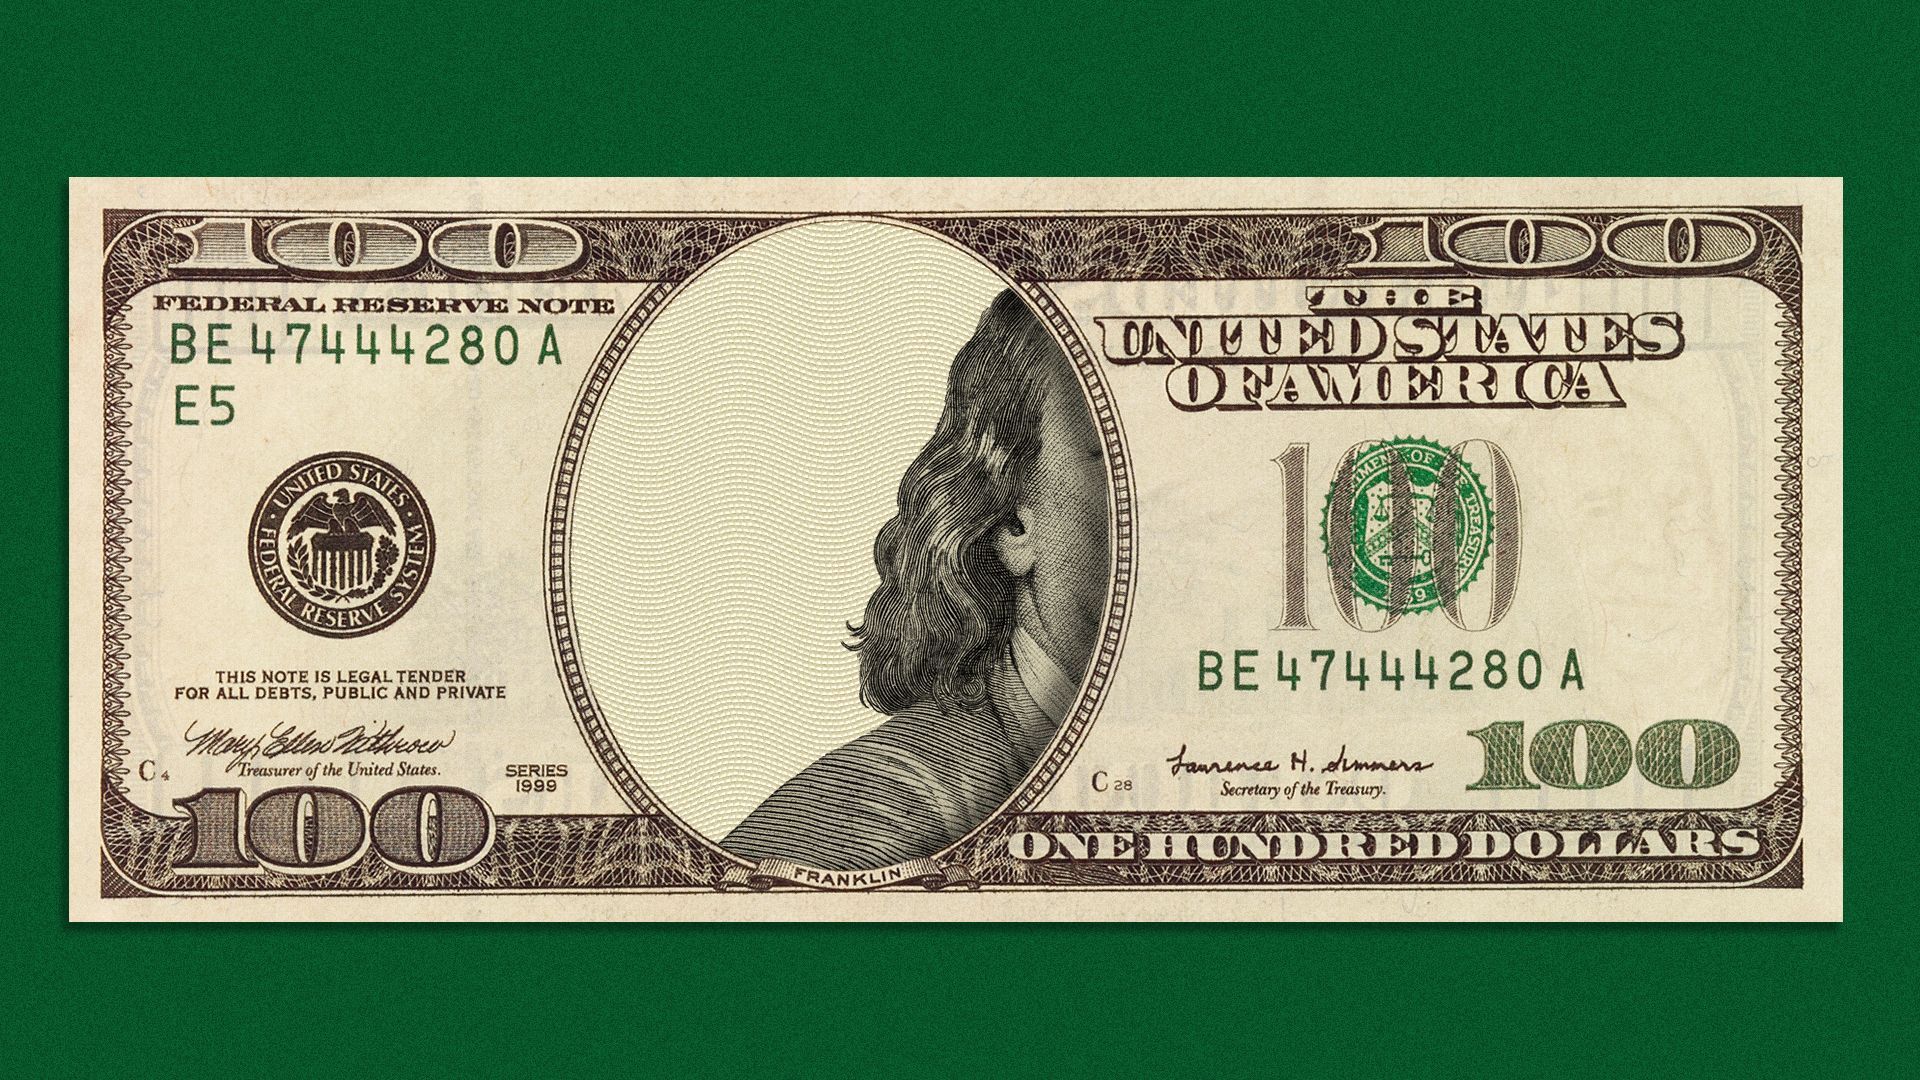 Illustration of Benjamin Franklin exiting the frame of the one hundred dollar bill.